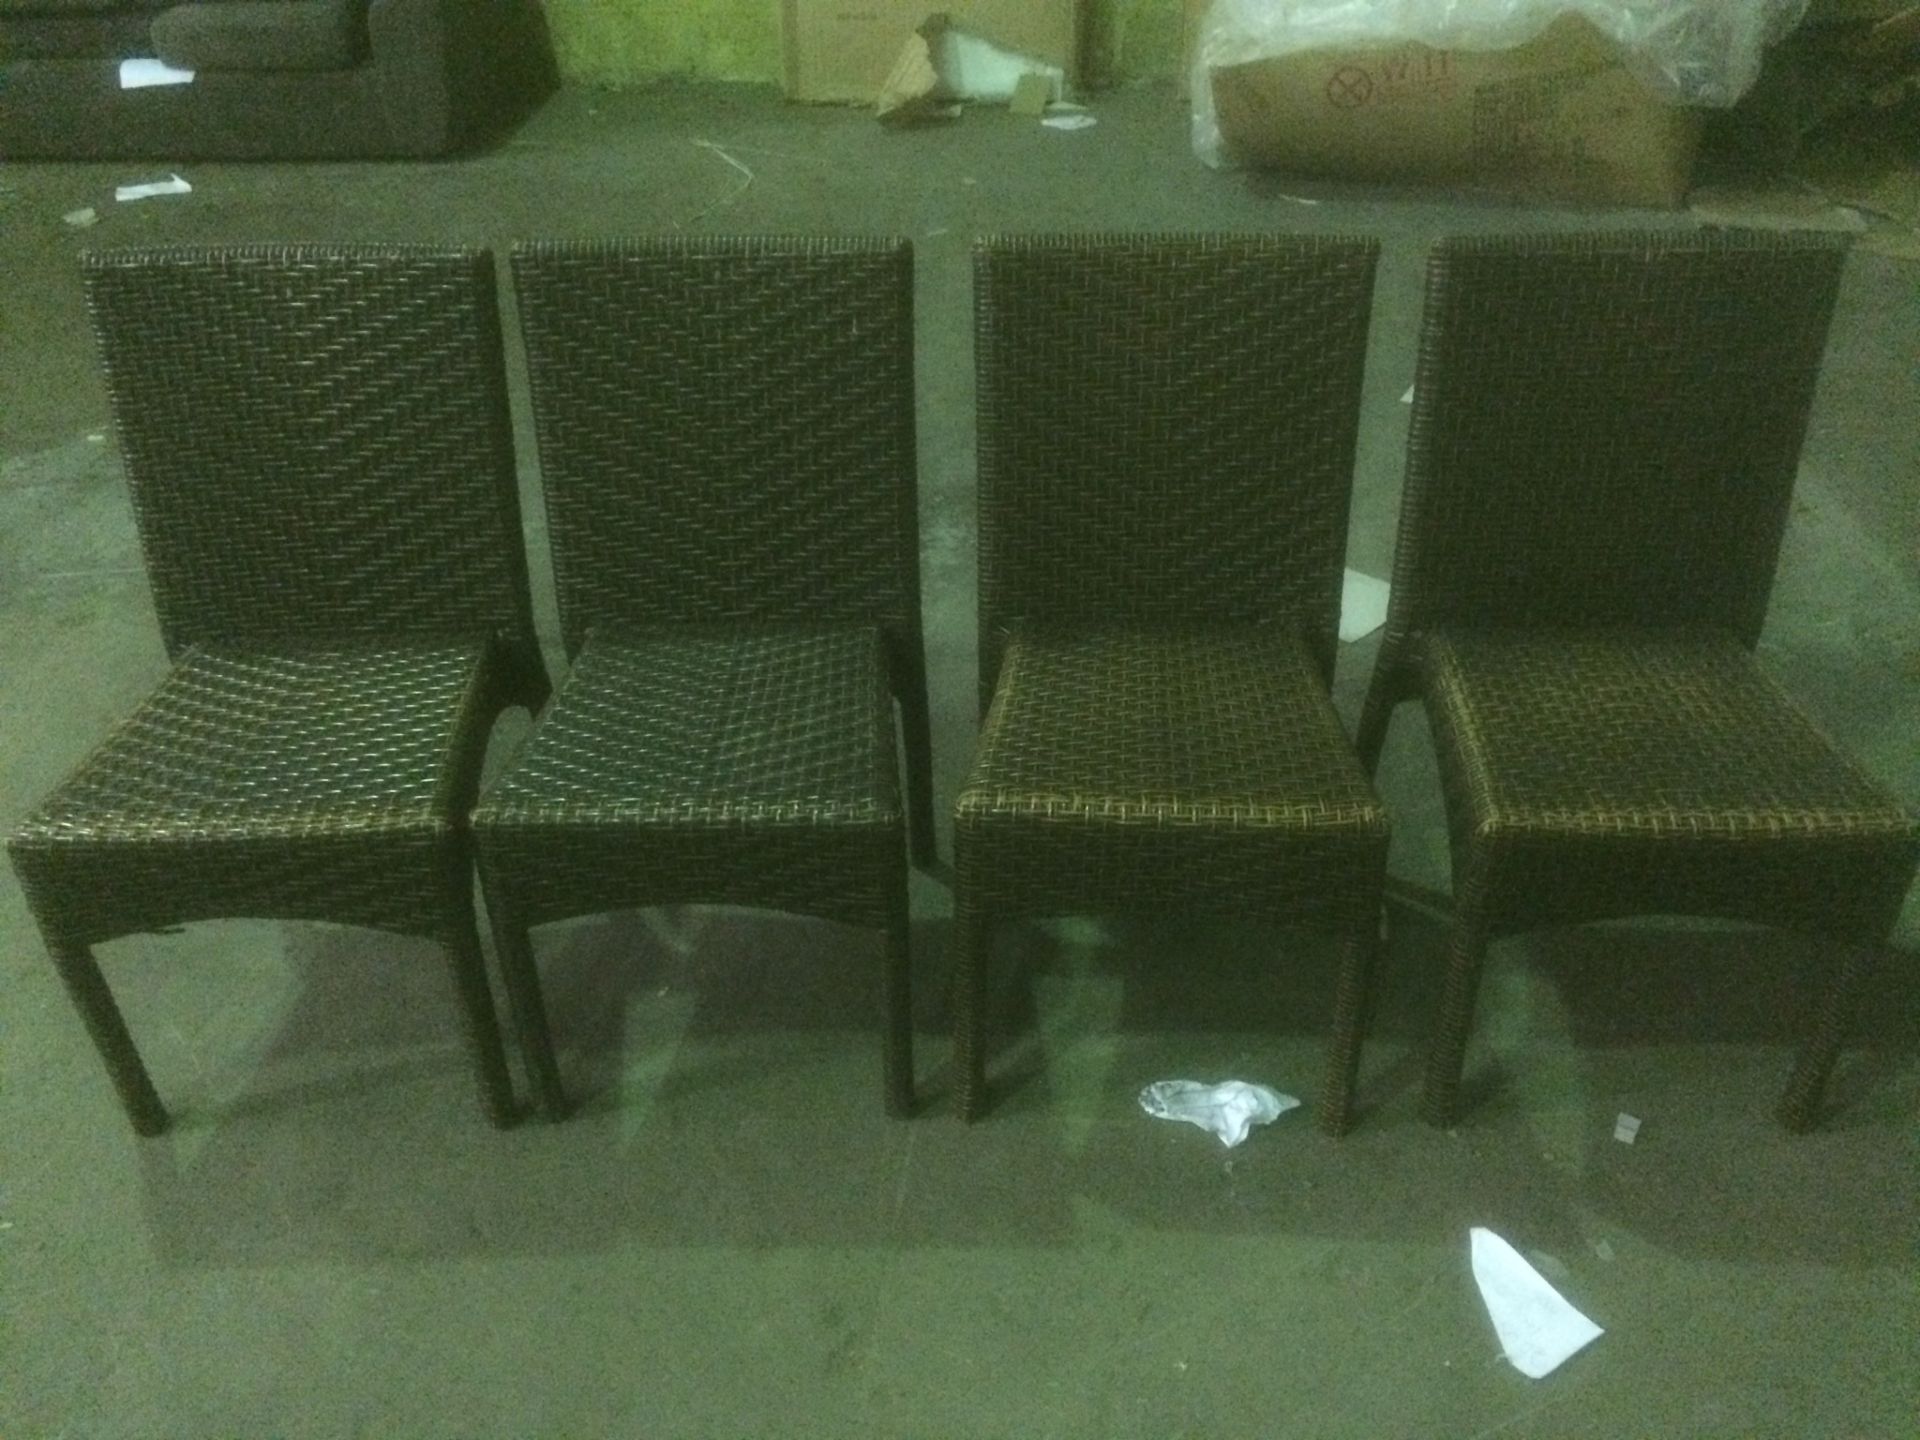 4 x brown woven cane garden chairs